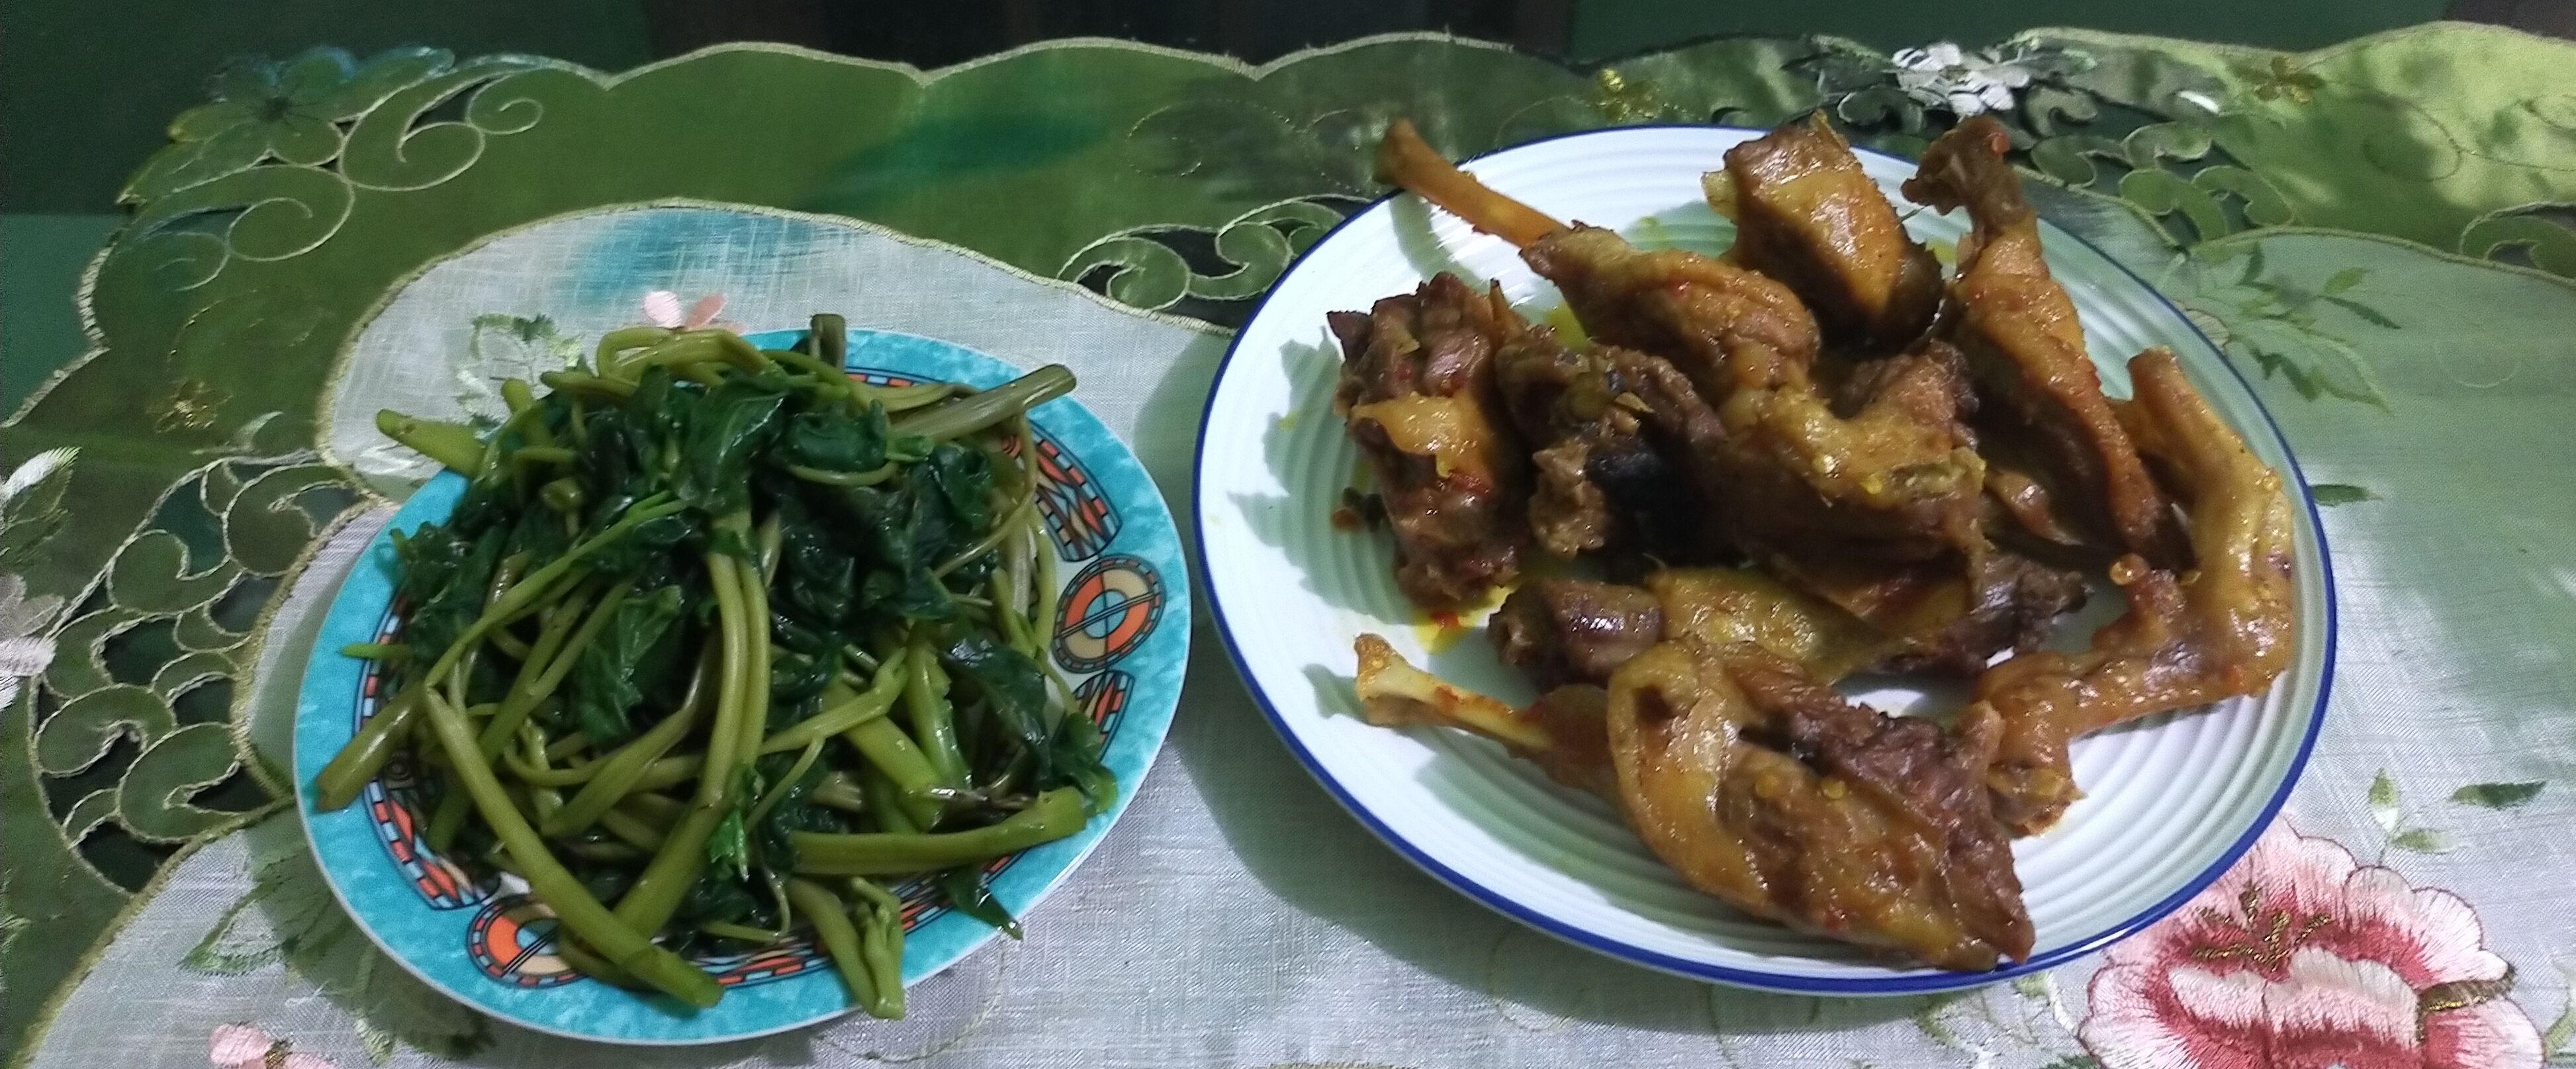 Mentog bumbu pedas manis dan sayur kangkung | dok.pri Siti Nazarotin